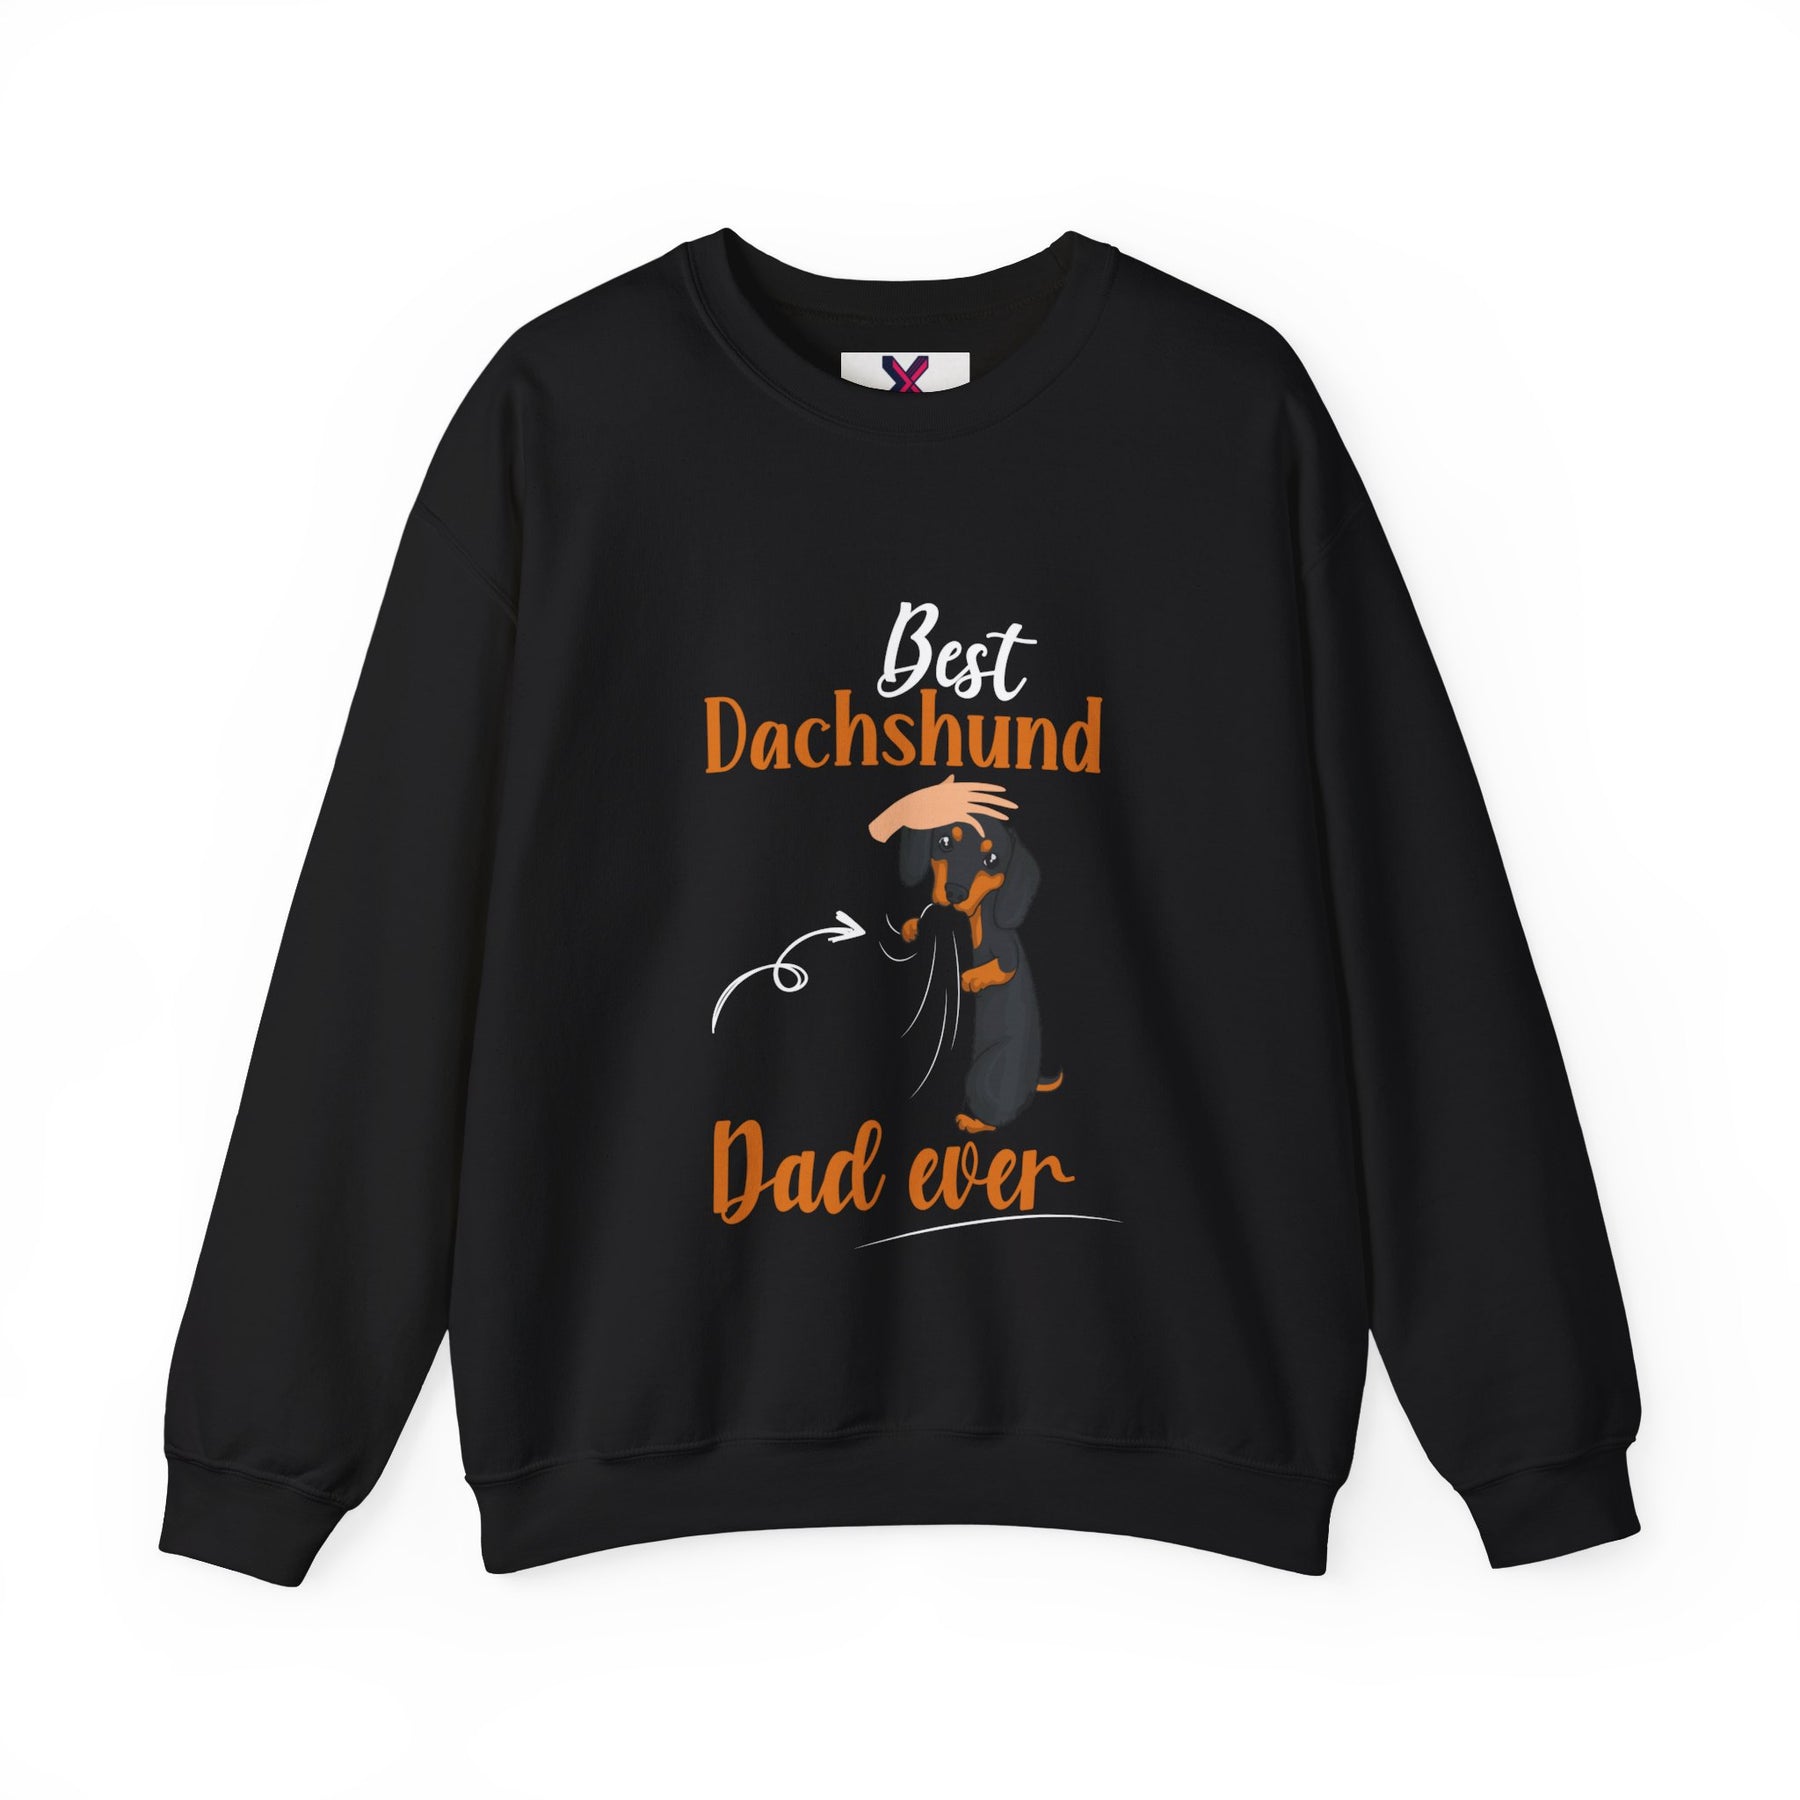 Dachshund Sweater / Dachshund Dog Sweater